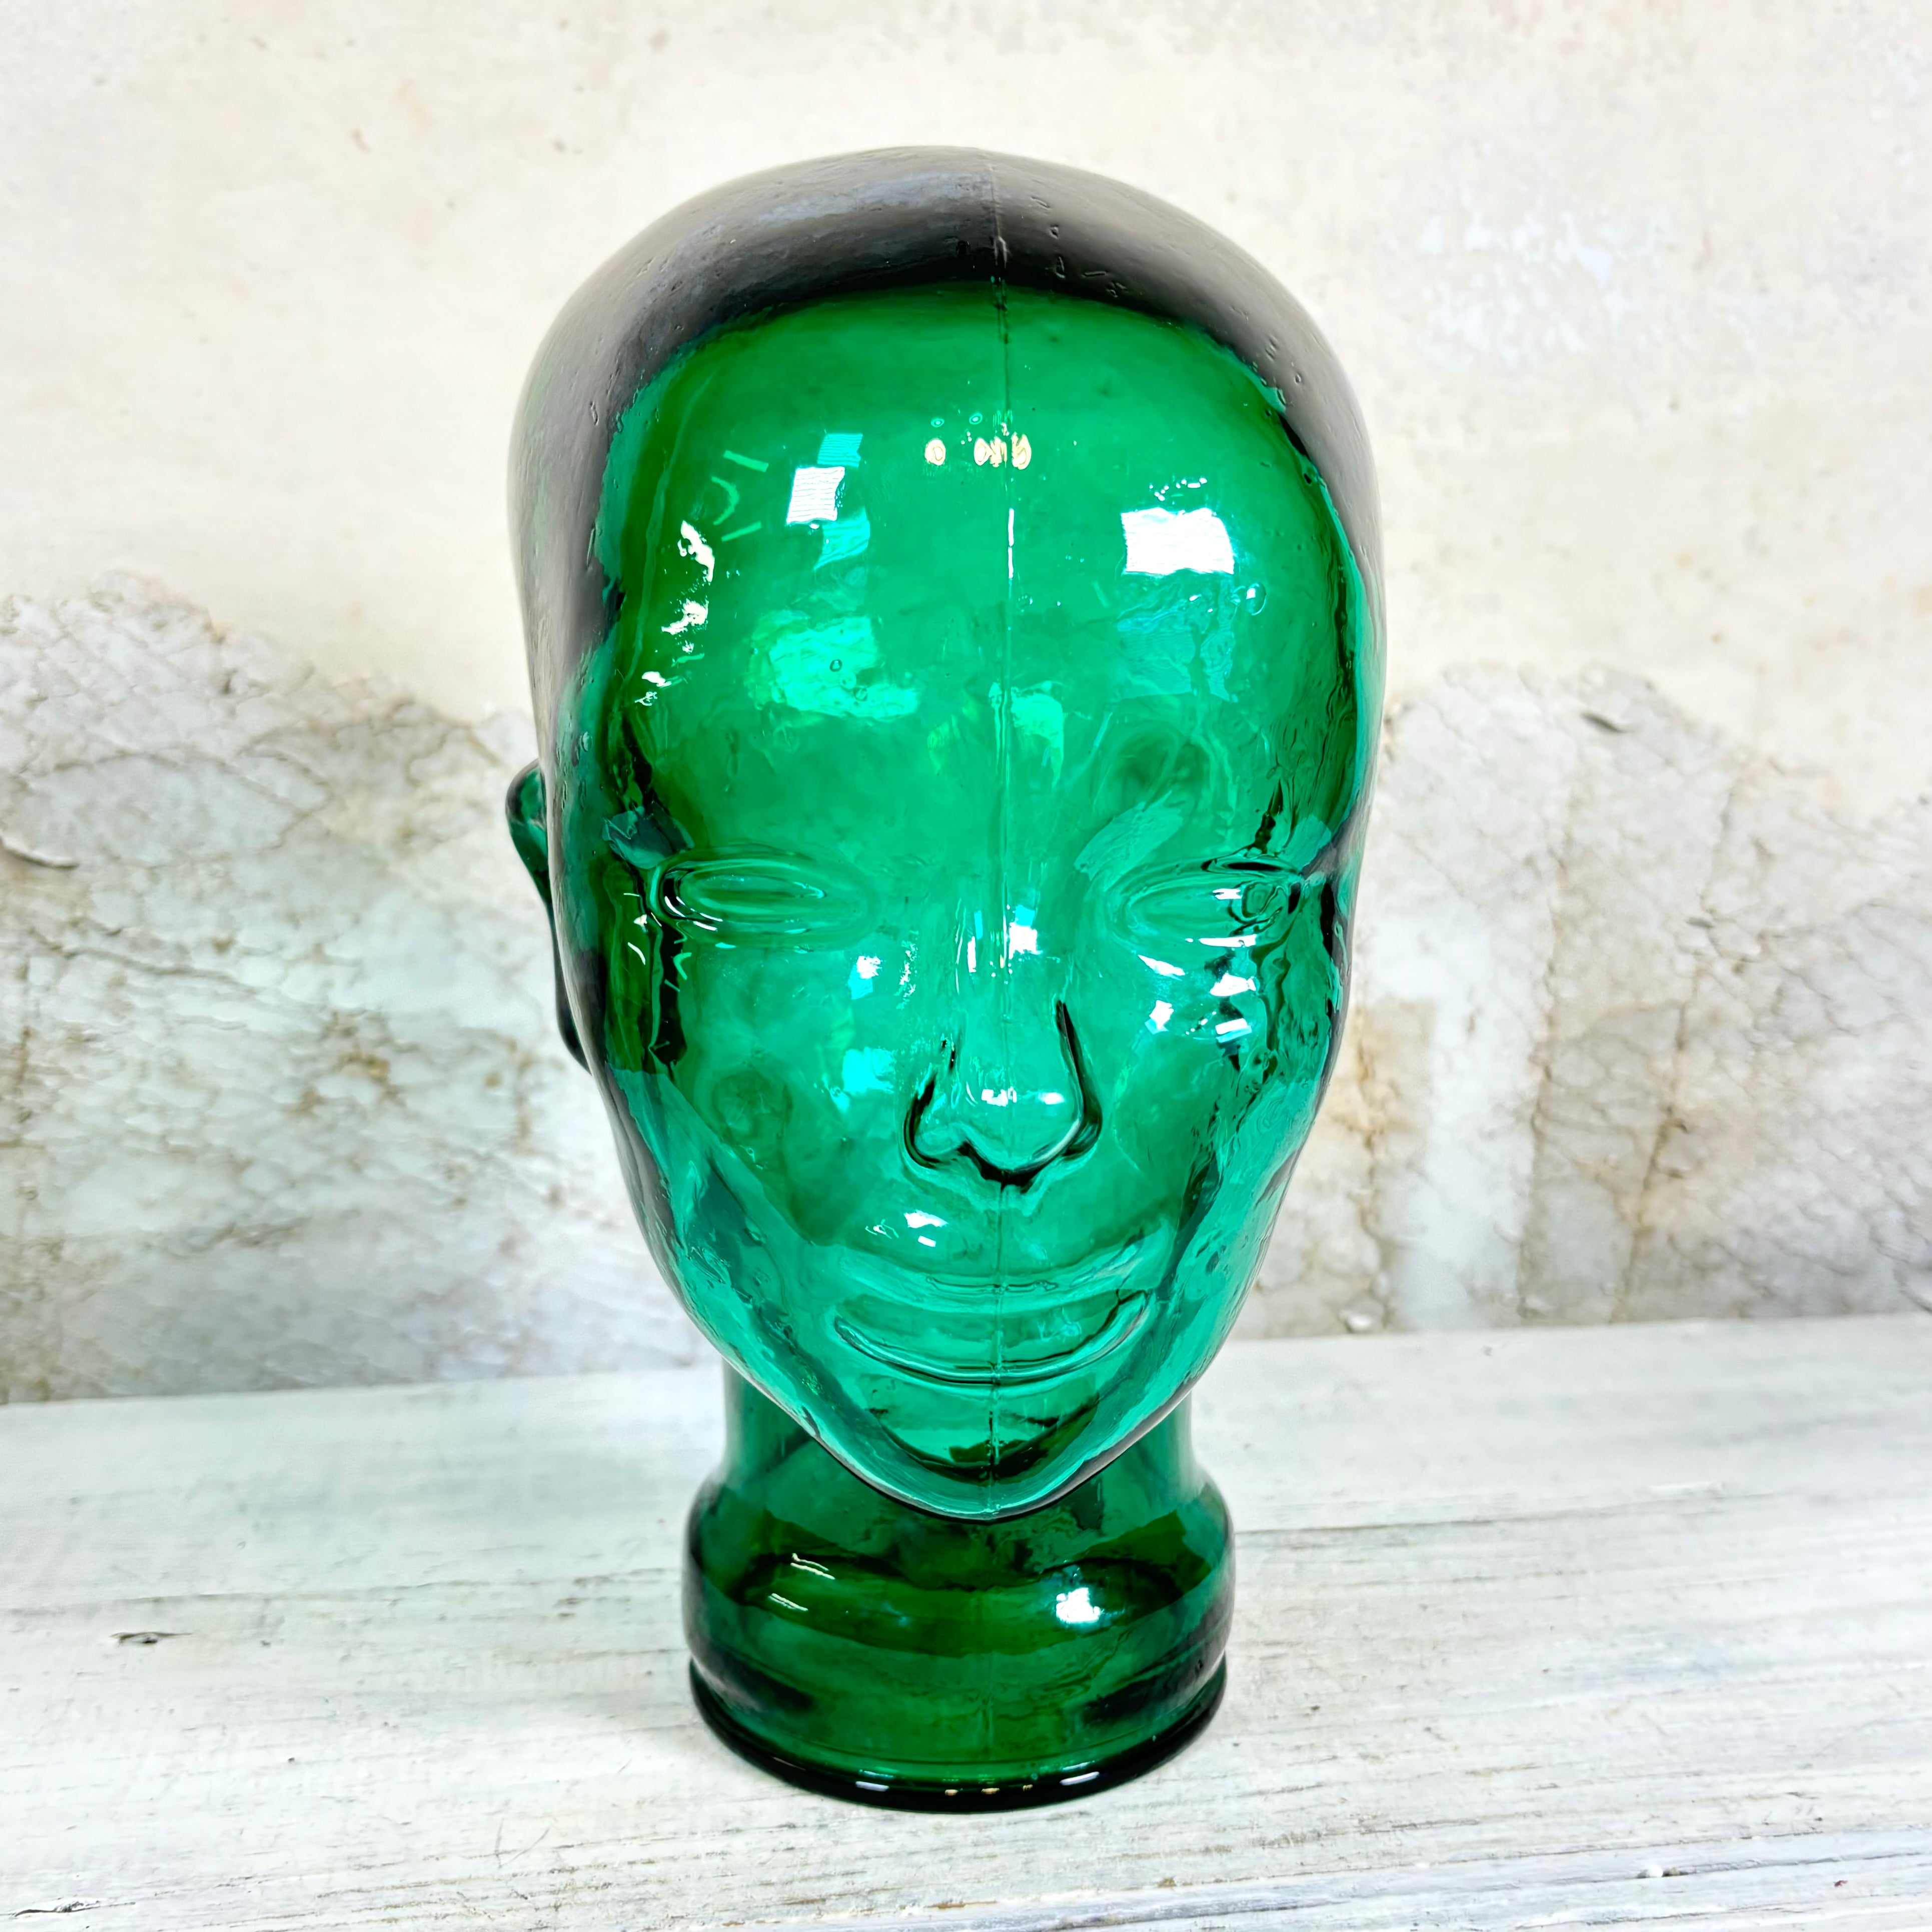 Vintage 1970s Green Glass Mannequin Head